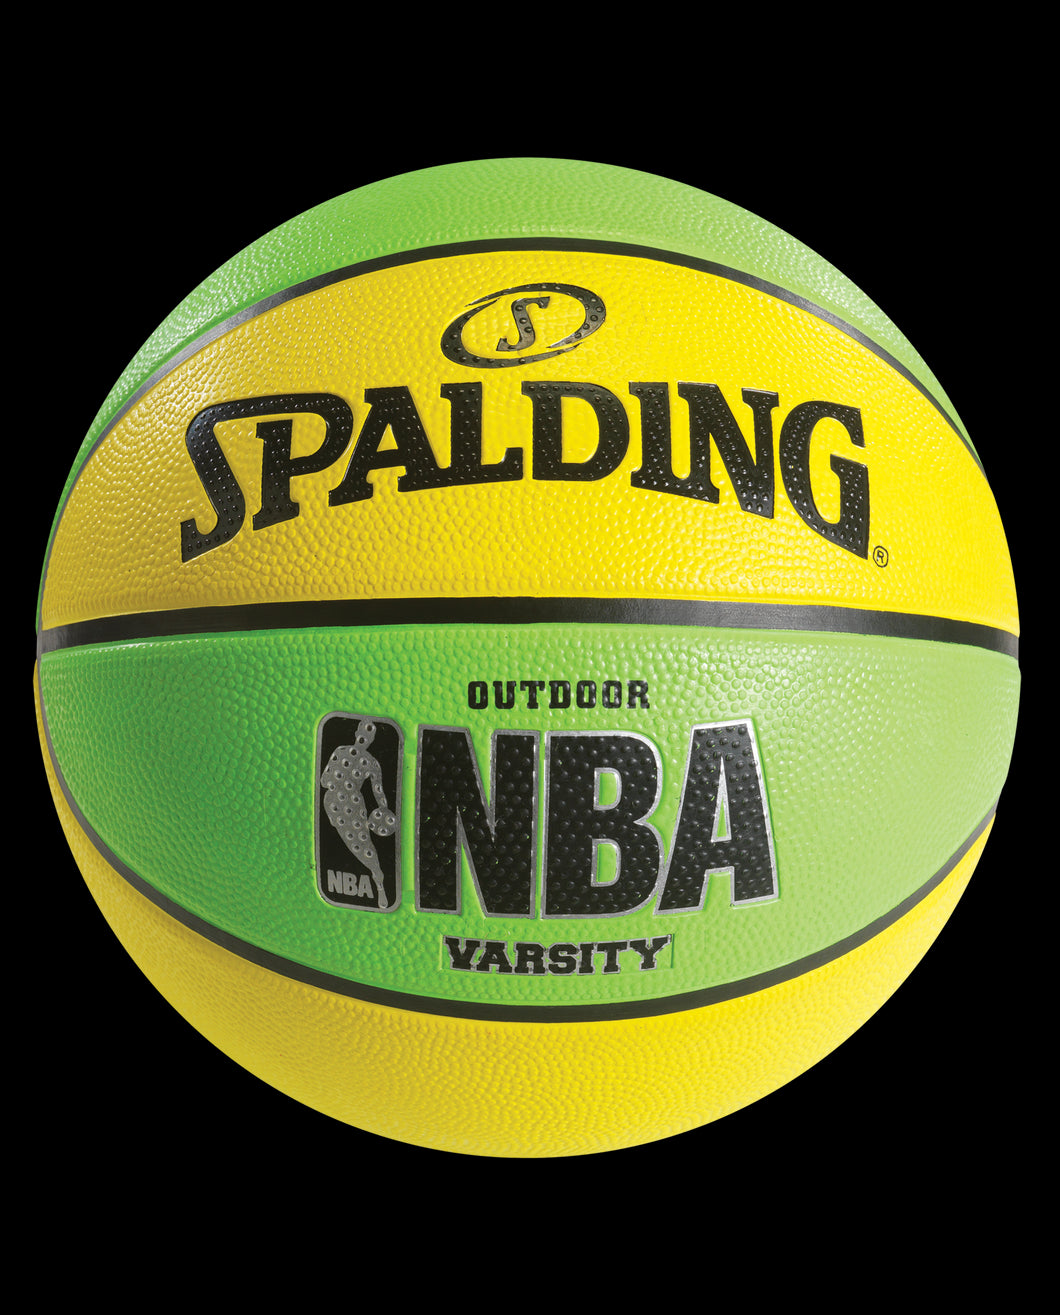 Spalding - NBA VARSITY BASKETBALL - 29.5